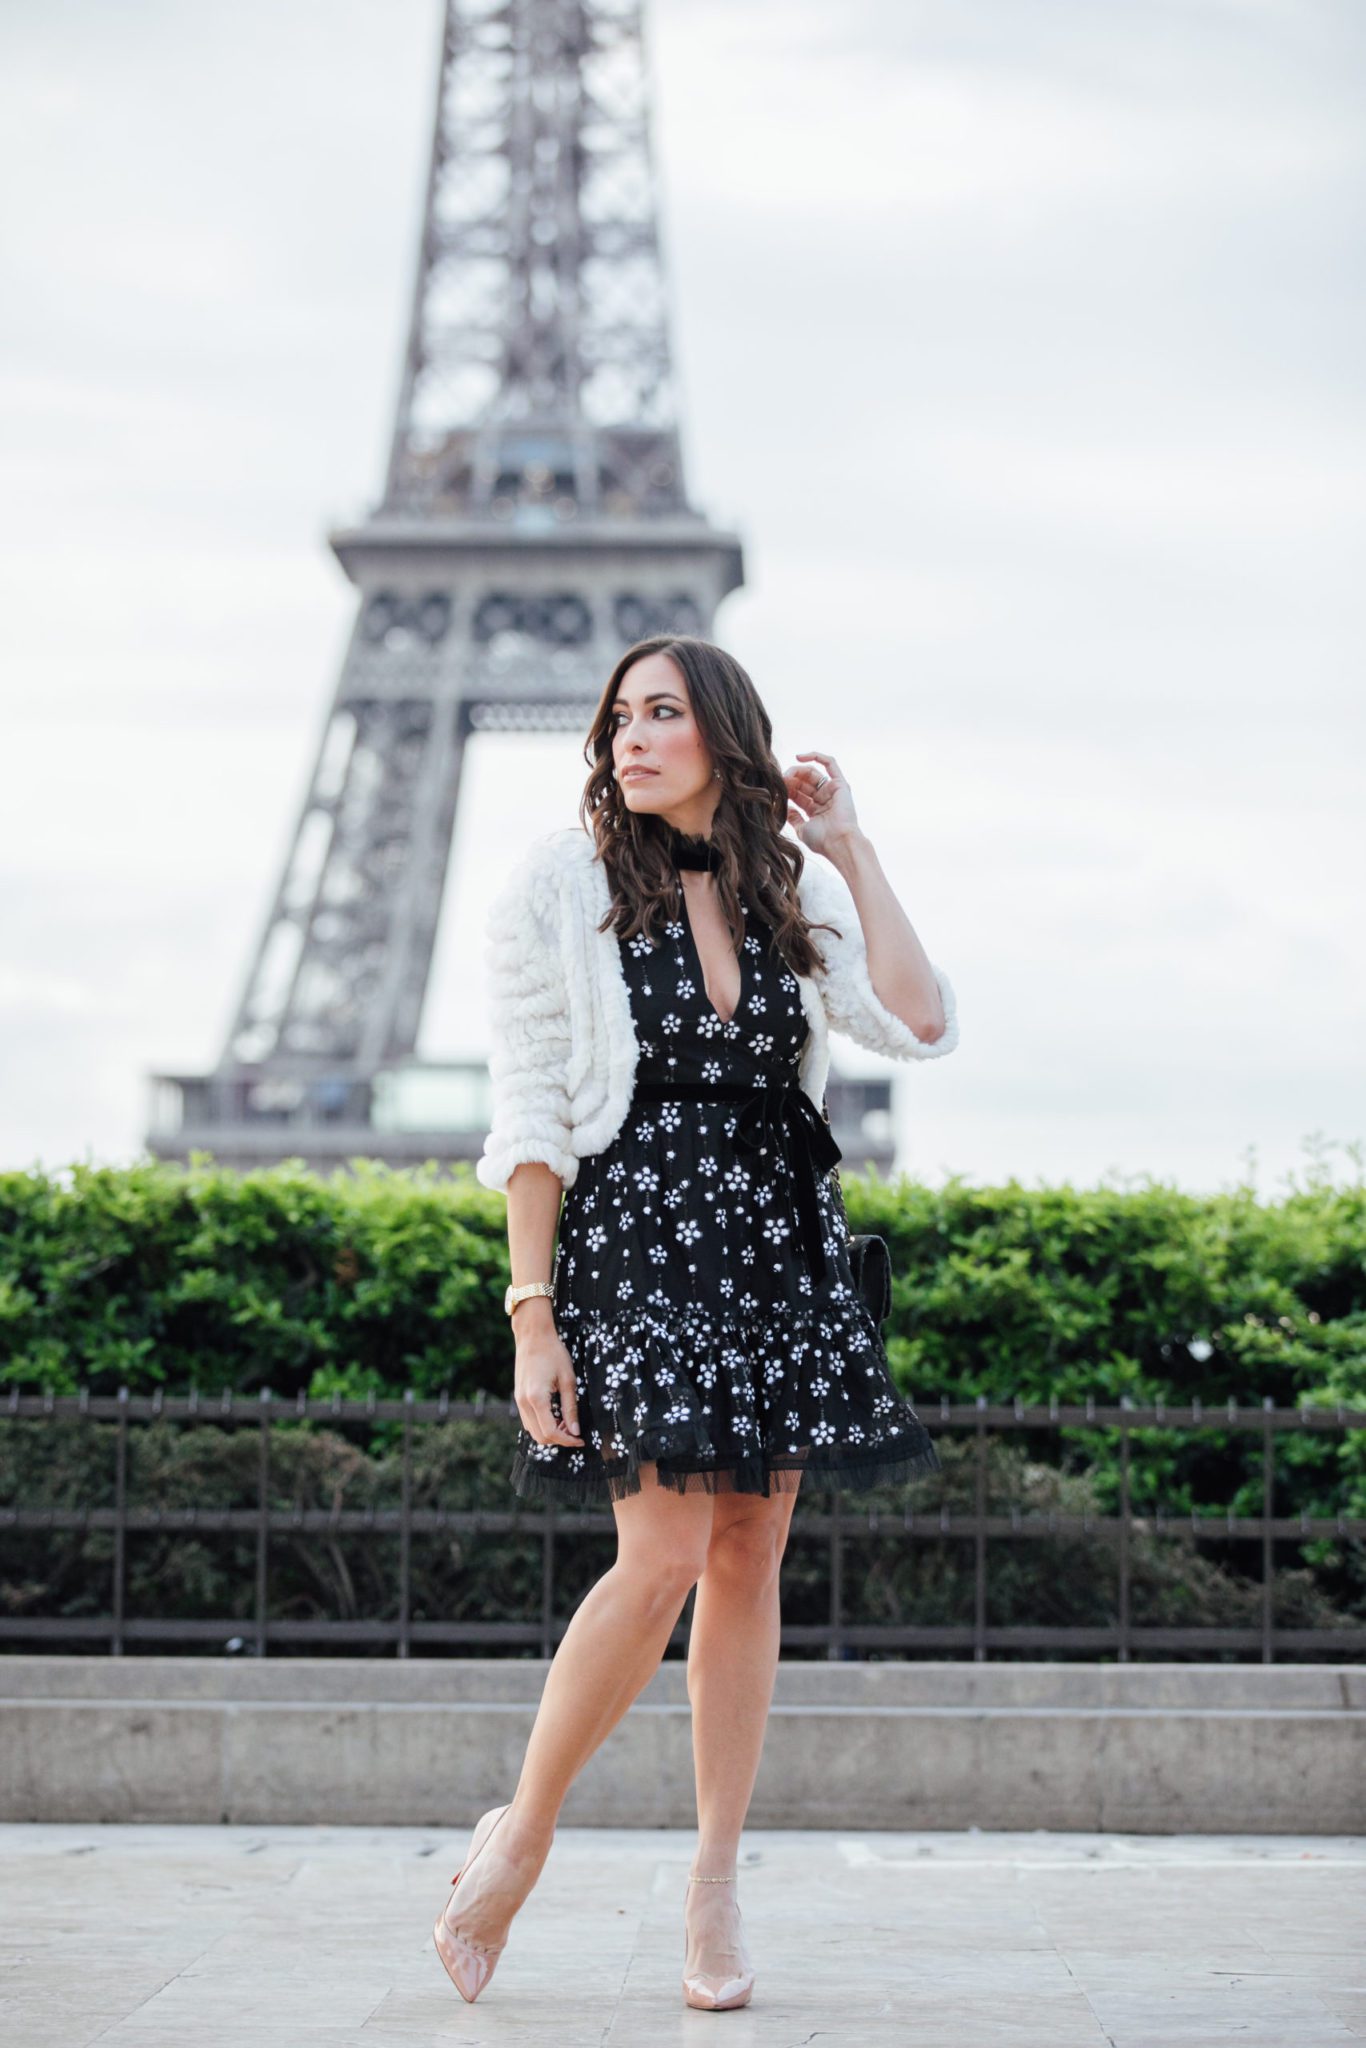 Alexis dresses shown by AGlamLifestyle blogger Amanda in Paris wearing Alexis Poppy dress with BCBG fur shrug